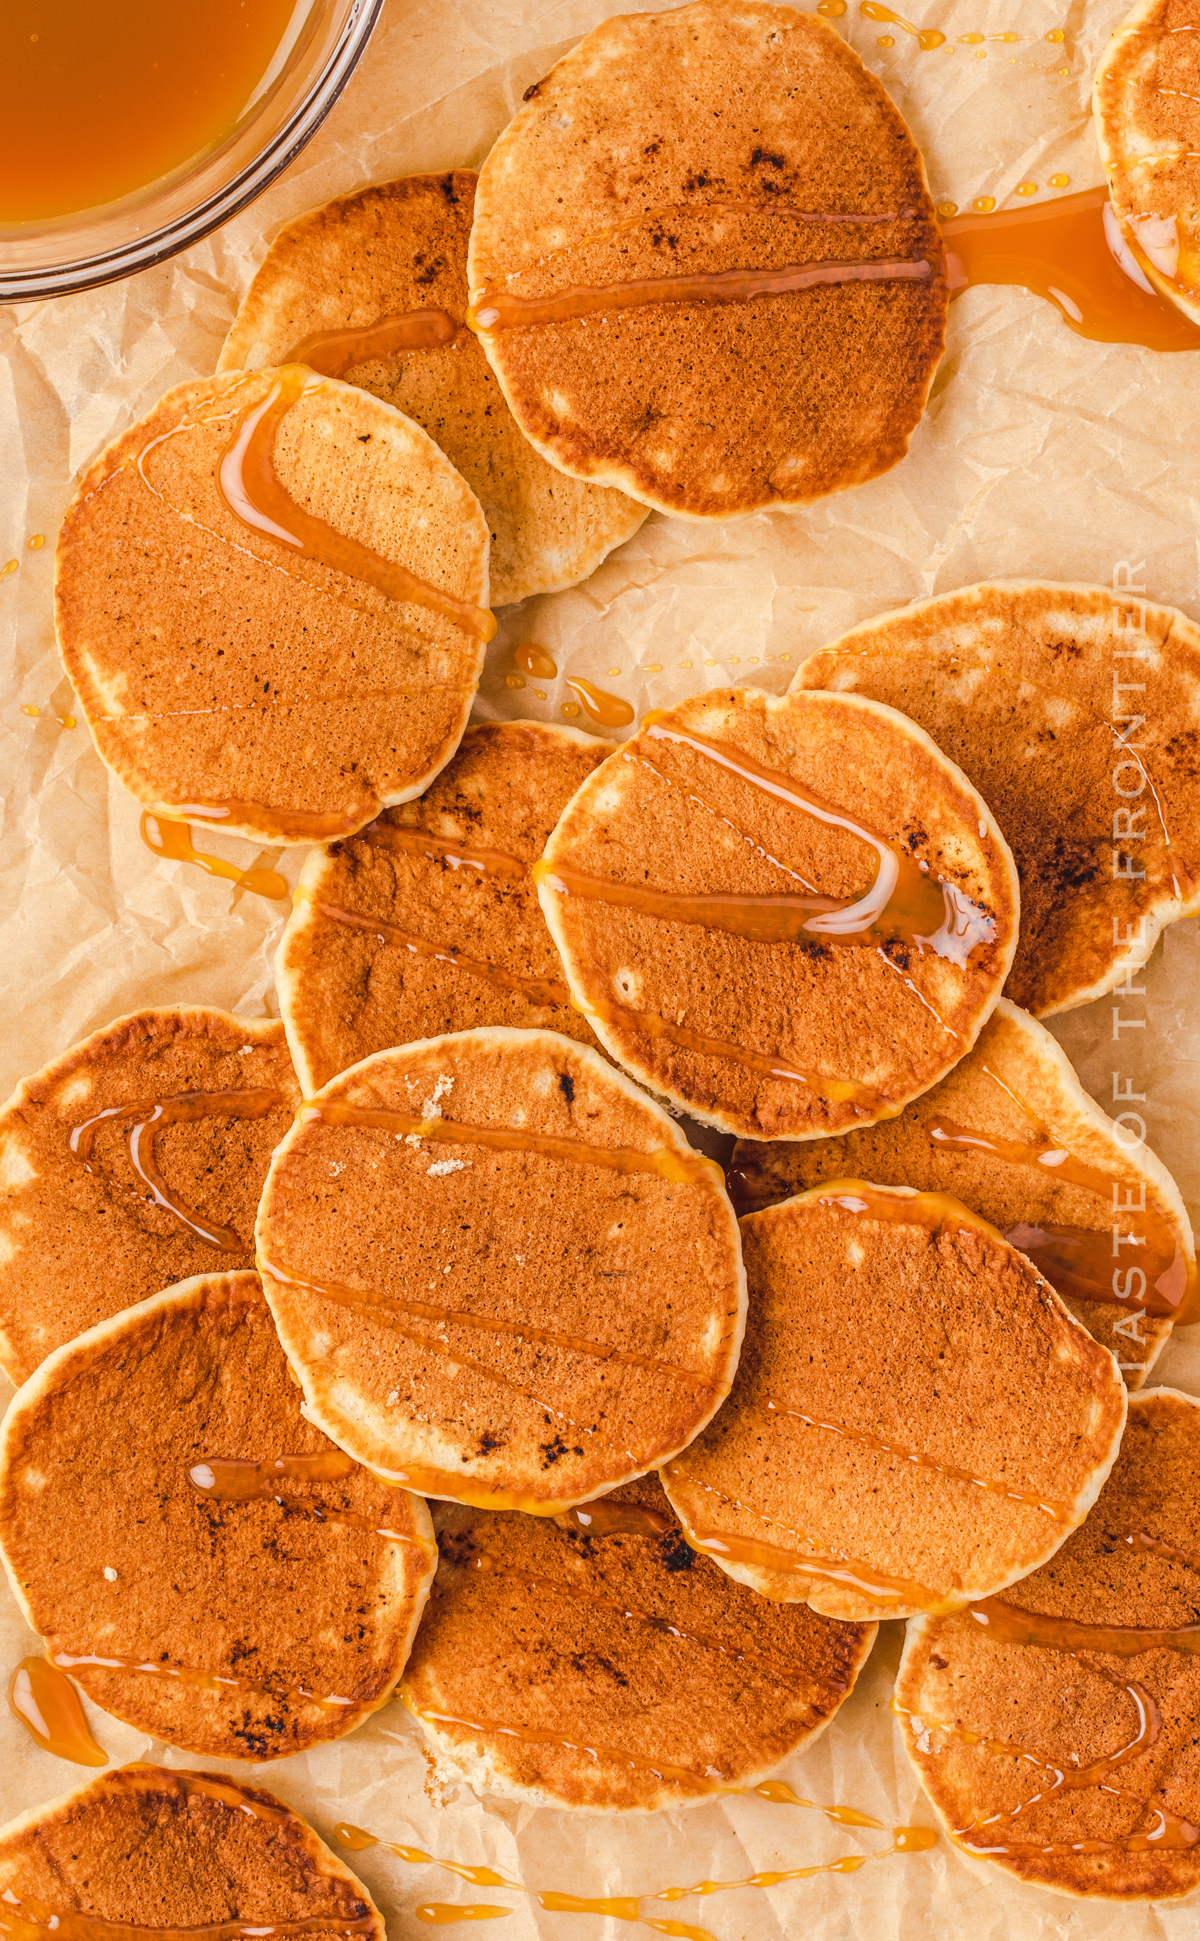 Mini Pancakes (Silver Dollar Pancakes Recipe!)